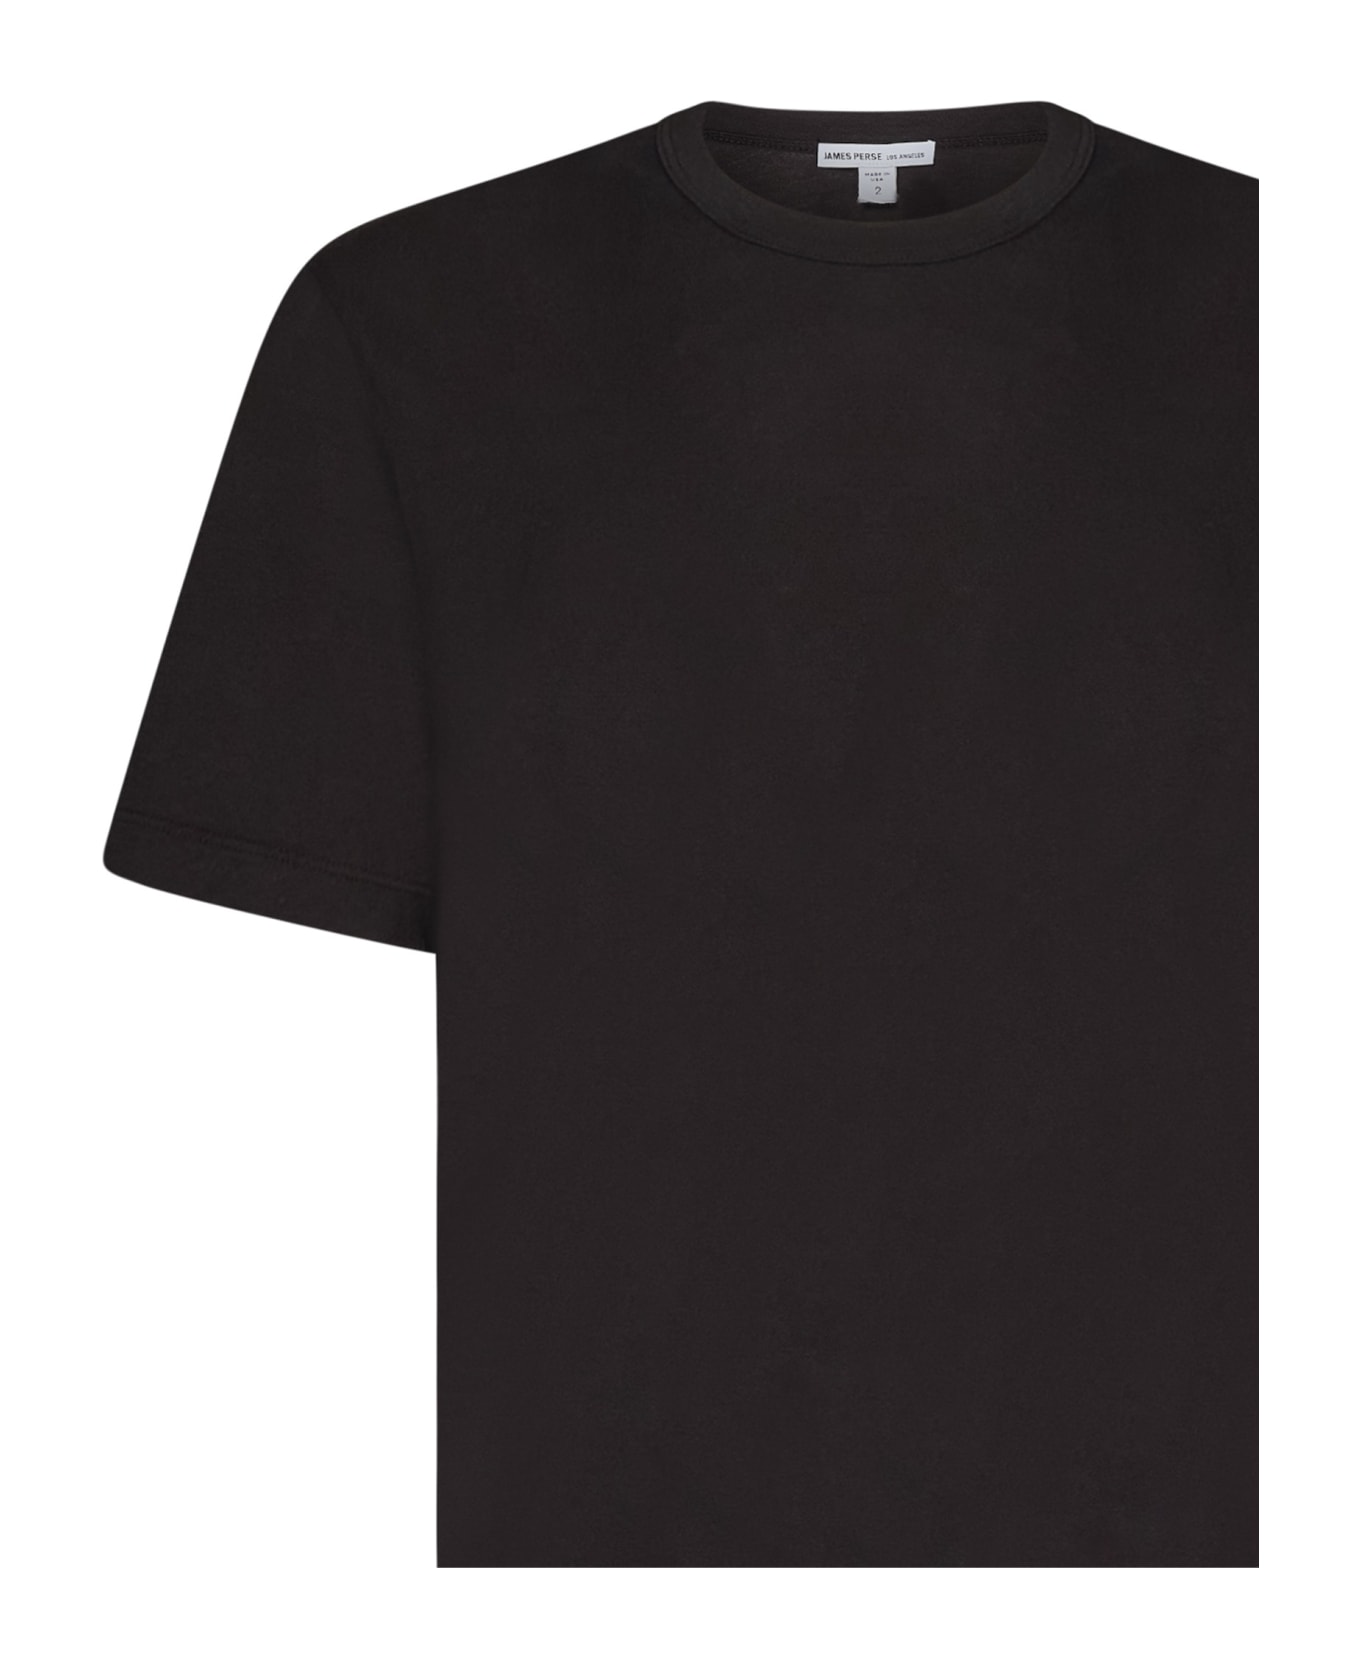 James Perse T-shirt - Brown